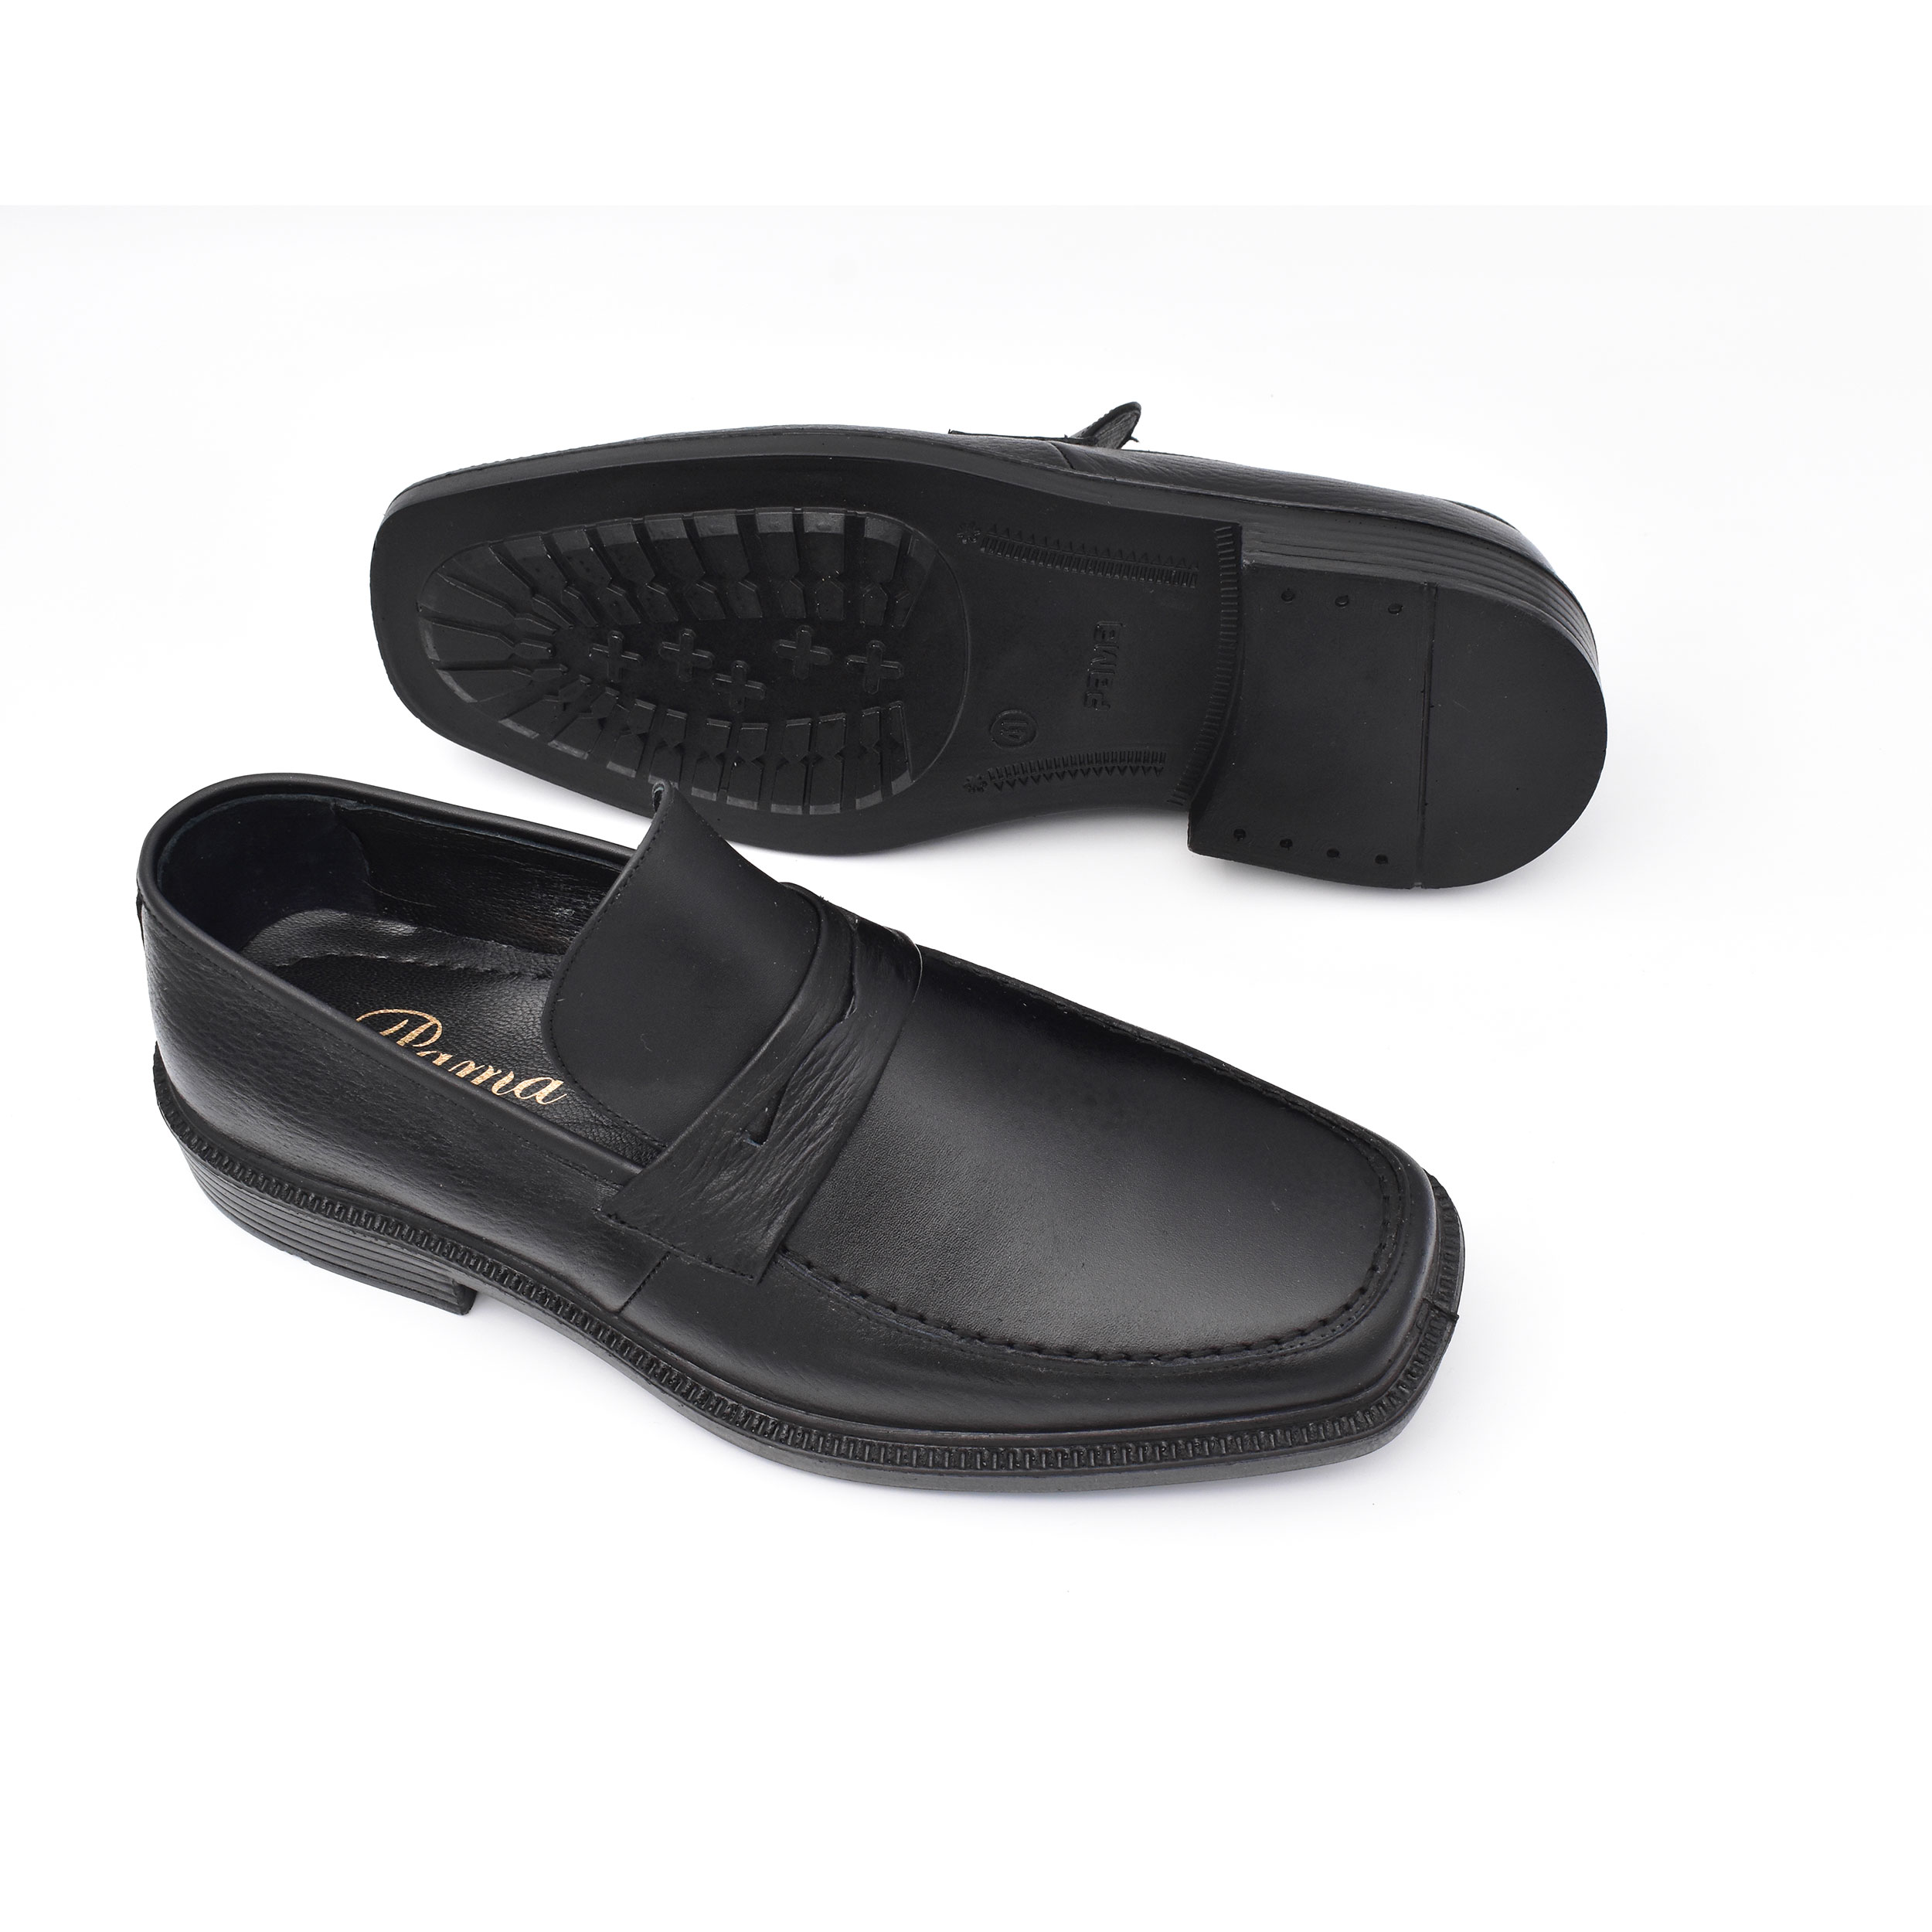 کفش مردانه پاما مدل Oscar کد G1189 -  - 6